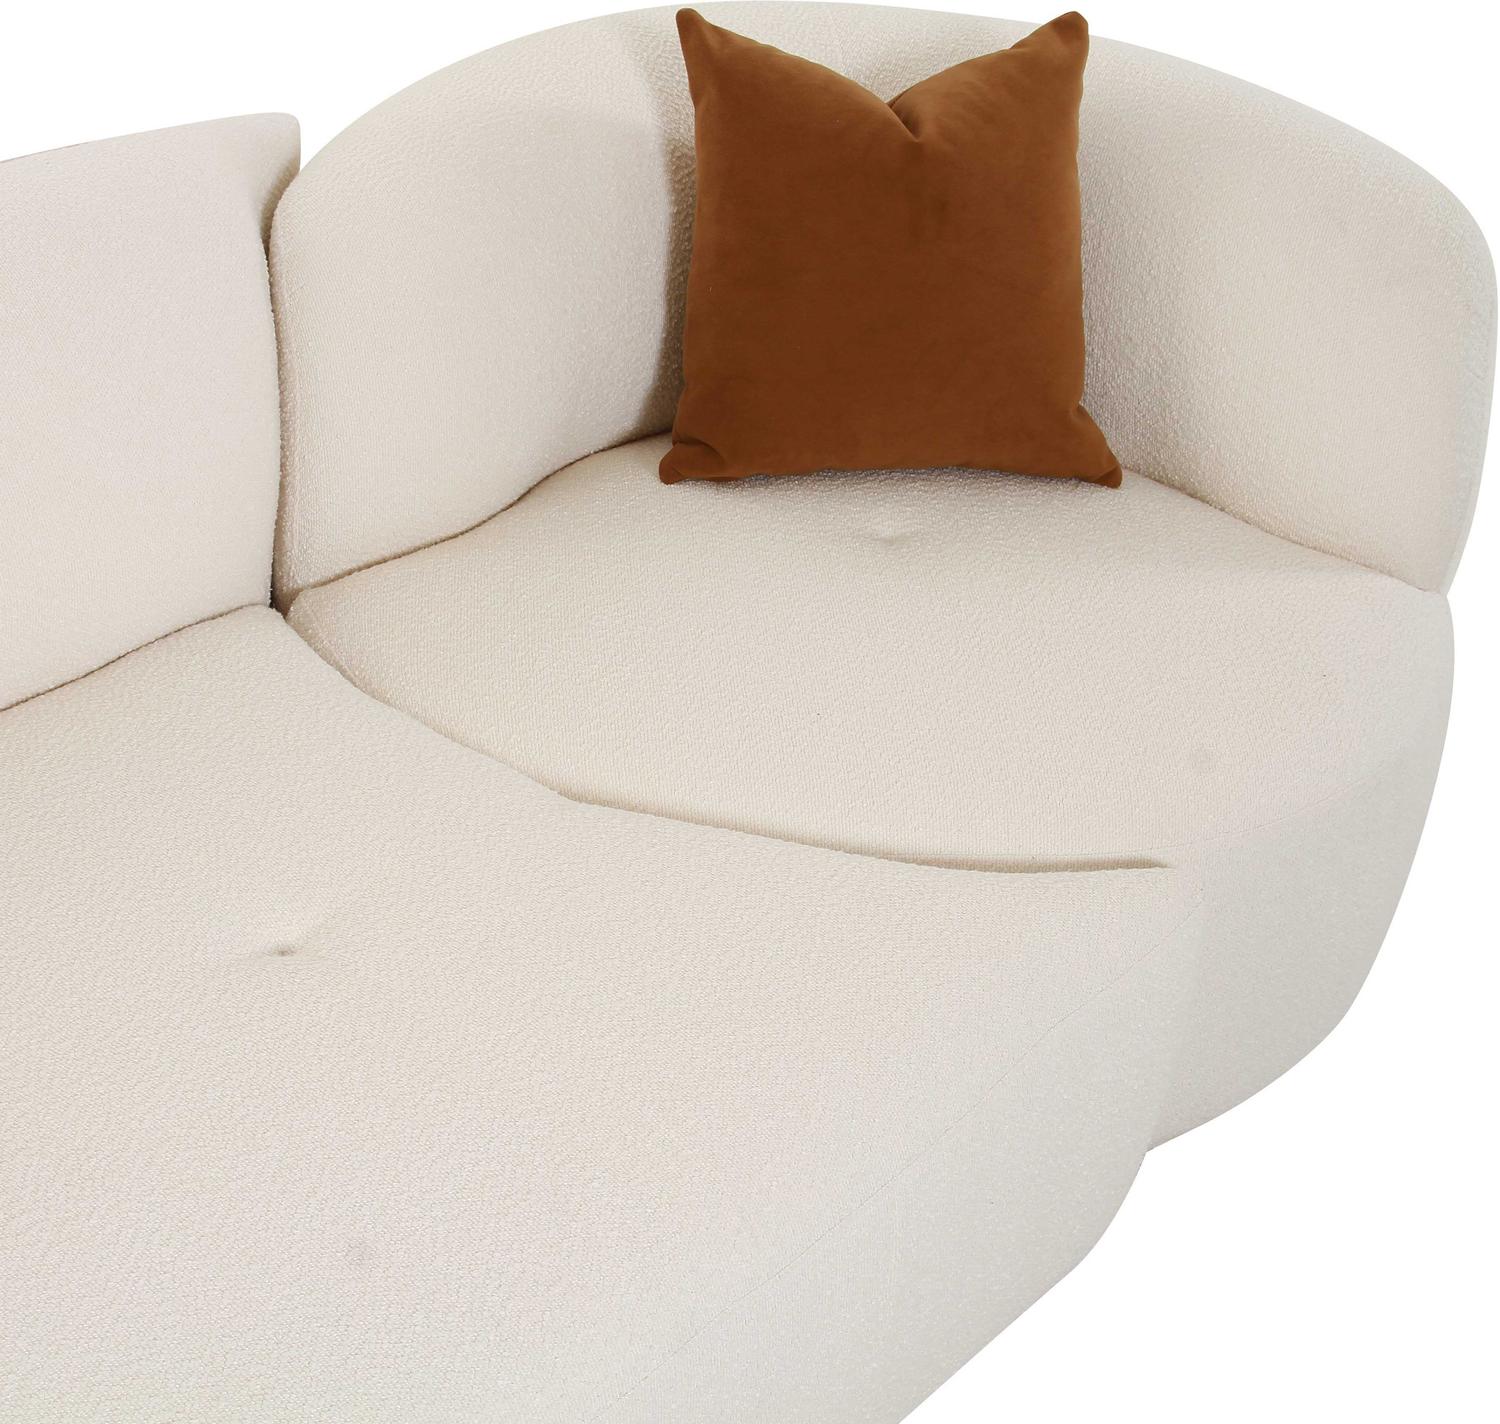 oversized sectional sofa Tov Furniture Sofas Cream